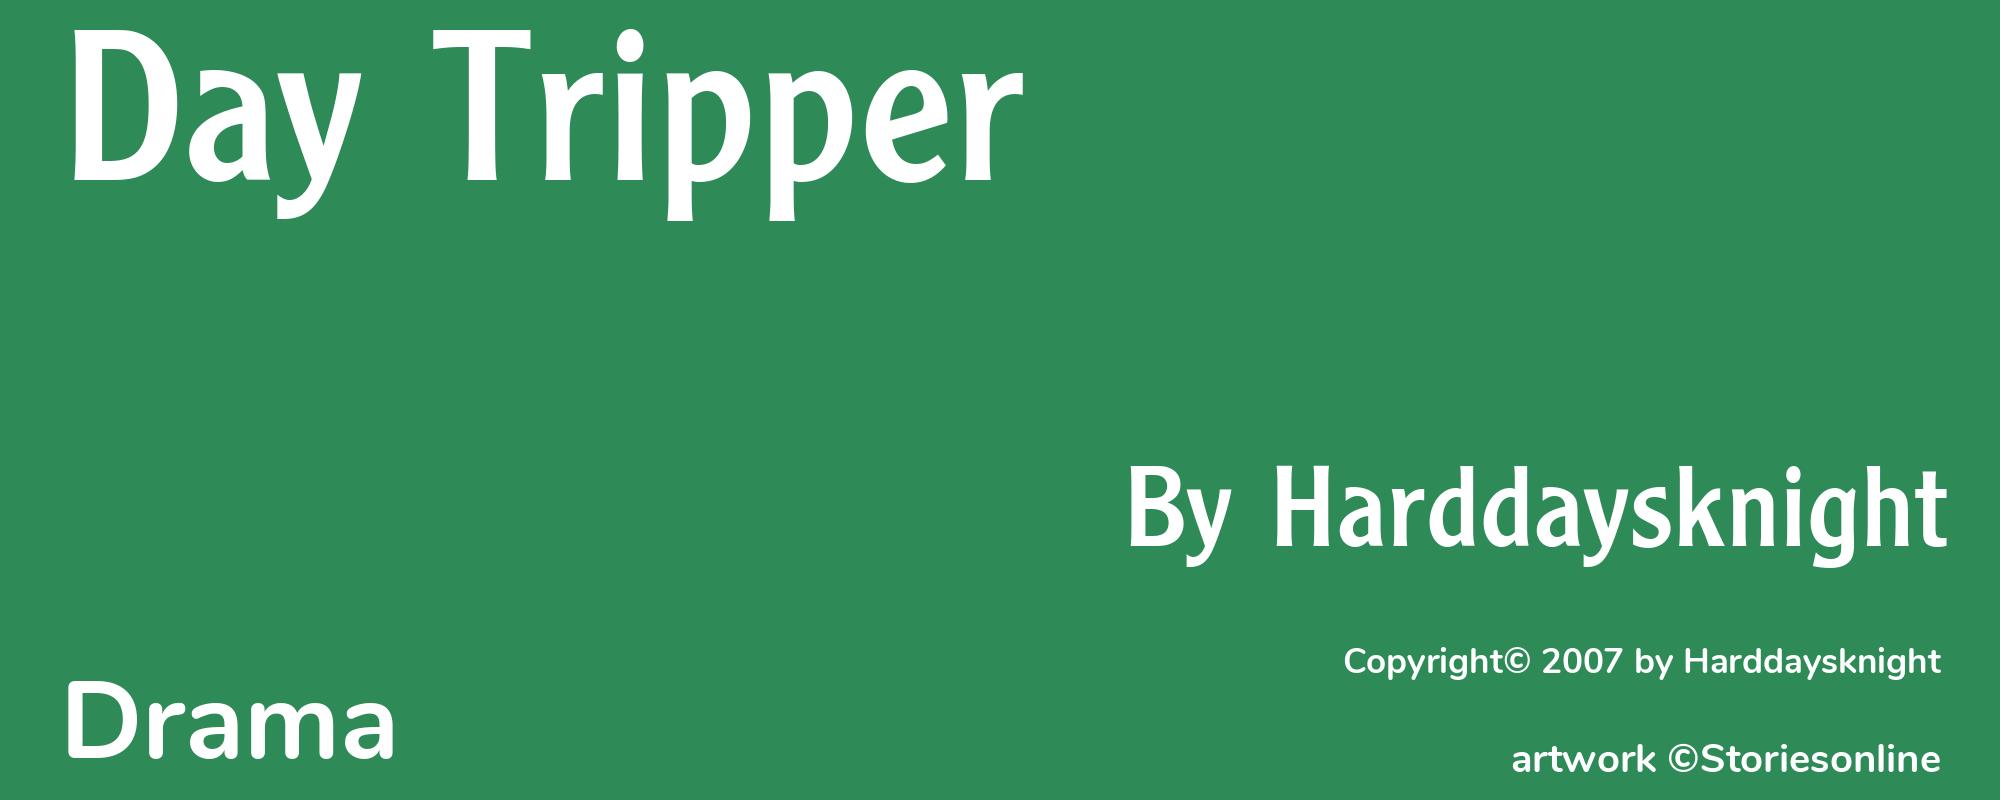 Day Tripper - Cover